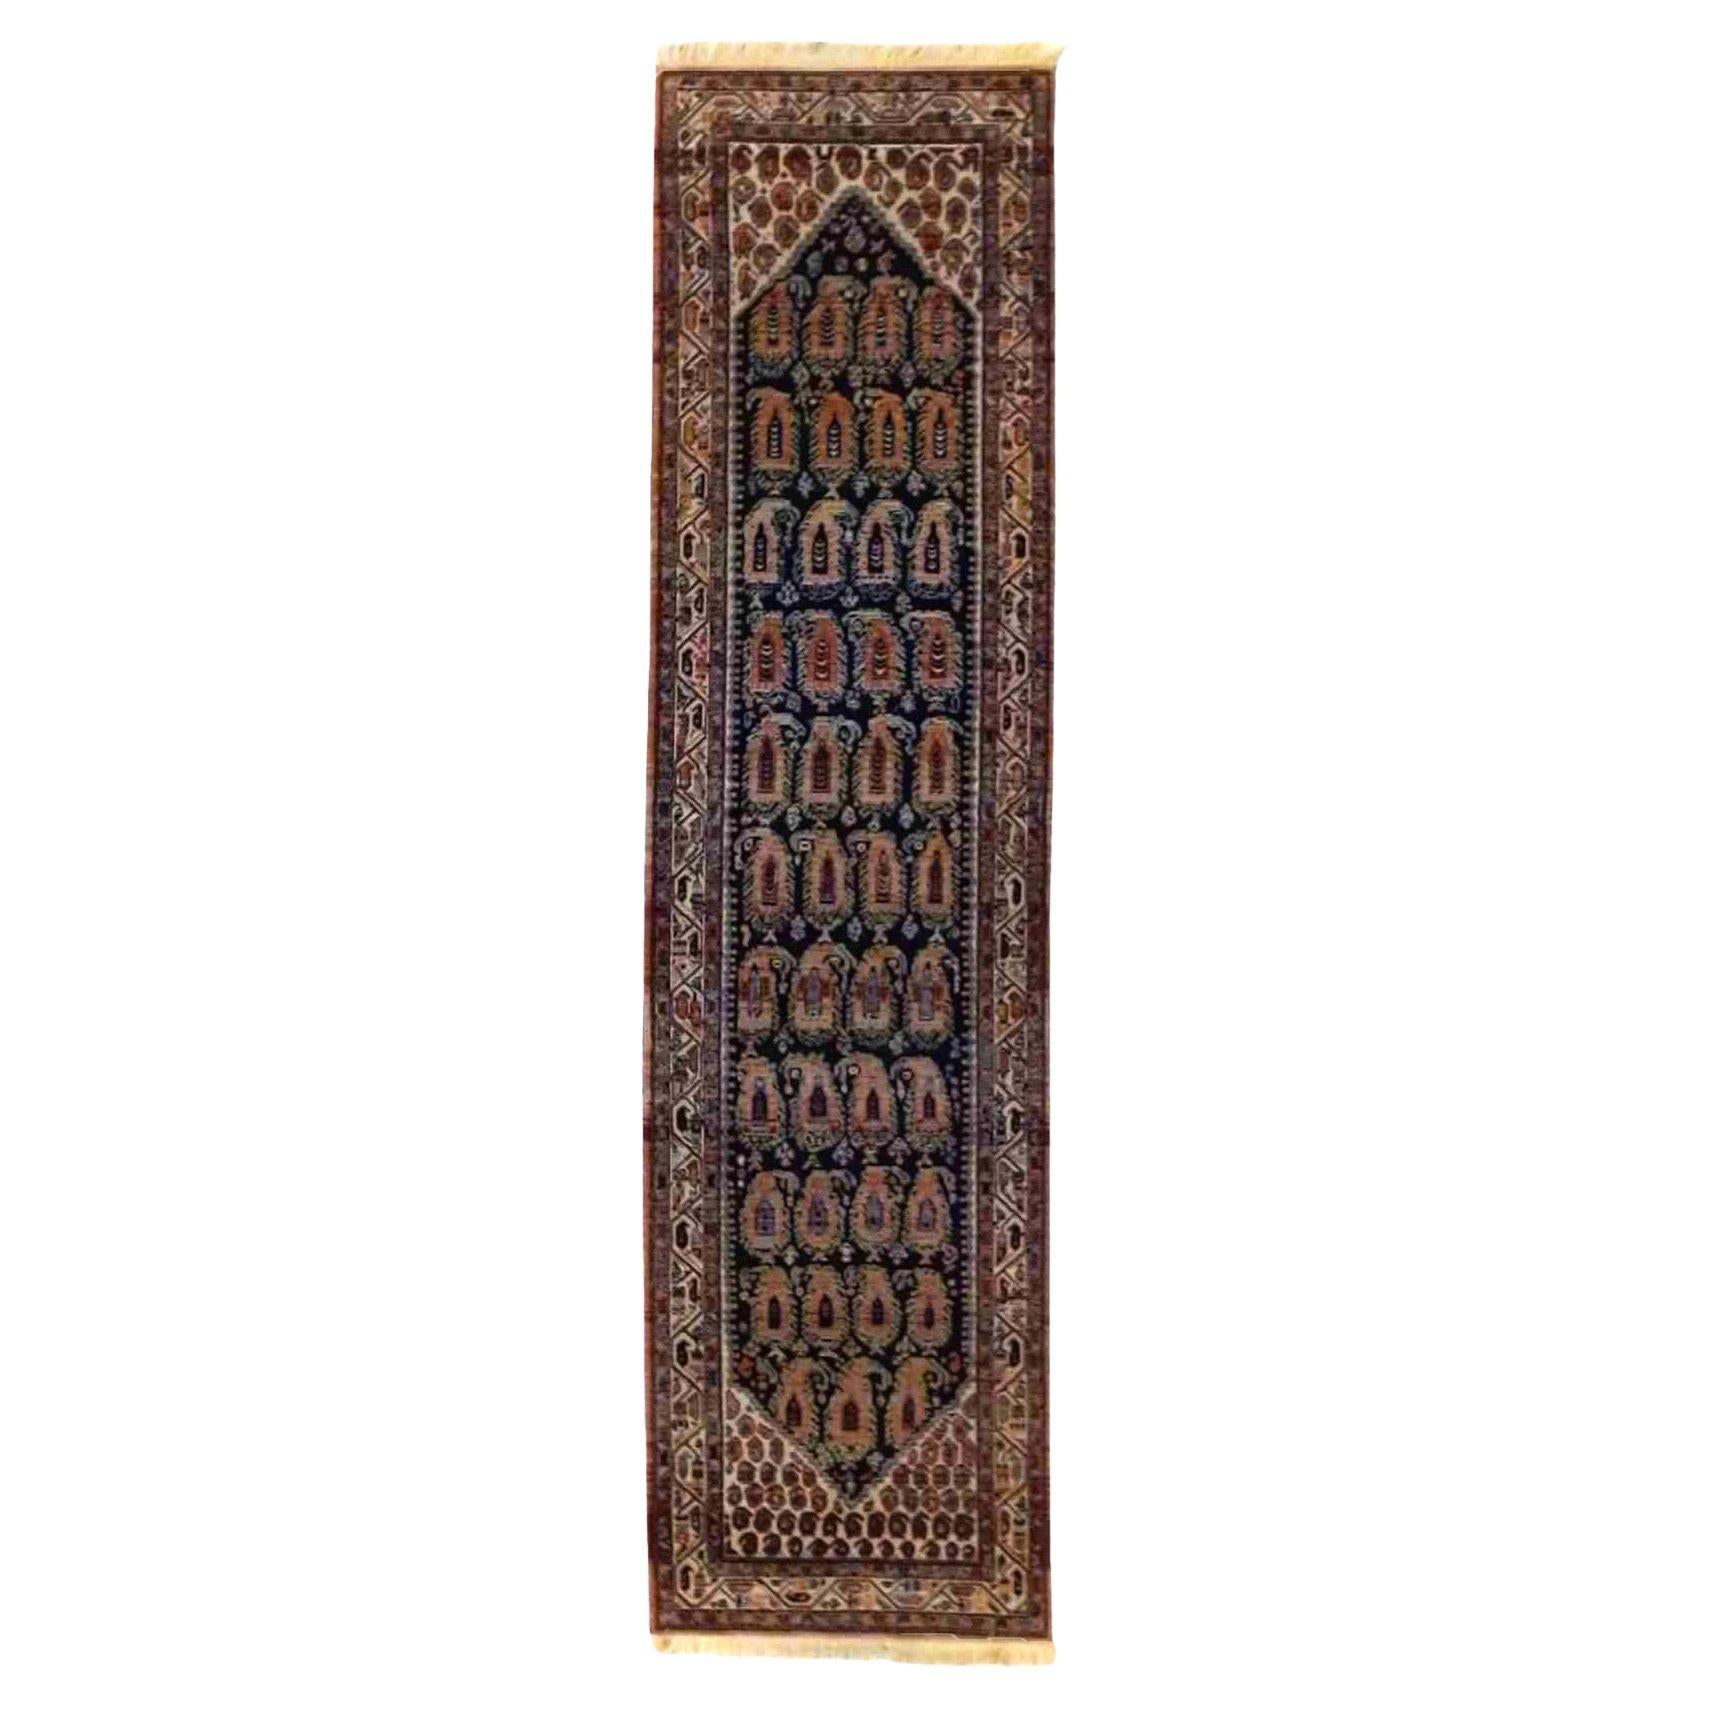 Antique Kadjar Karastan Oriental 3x12 Rug Runner With Boteh Design C1930

Measures- 135''L x 34.25''W 